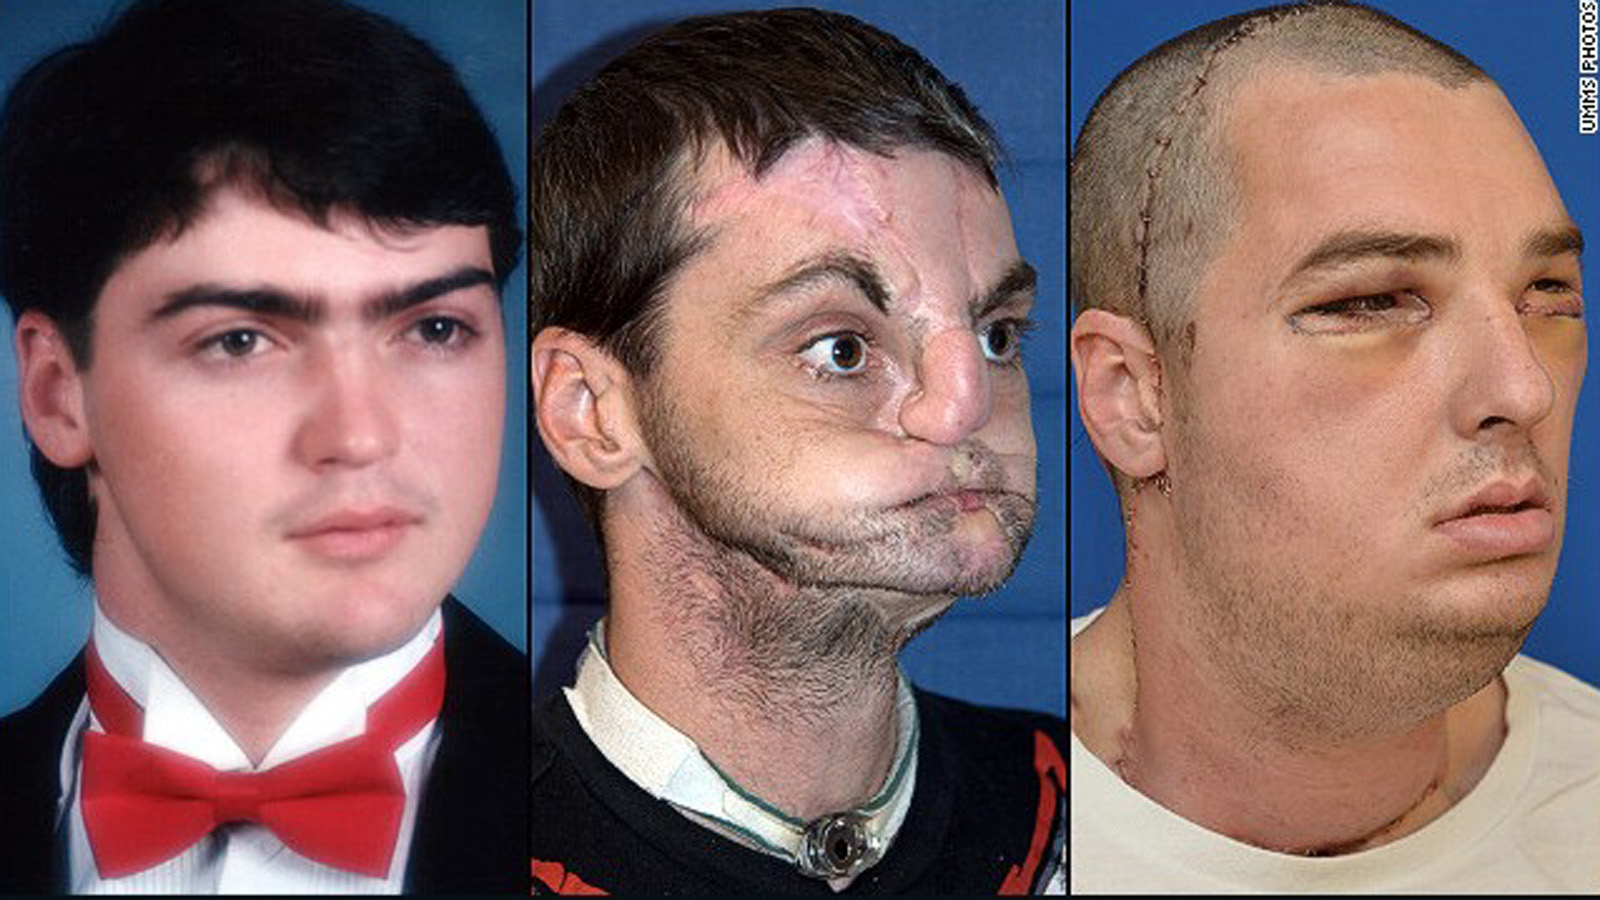 Facial deformities severe Calling people